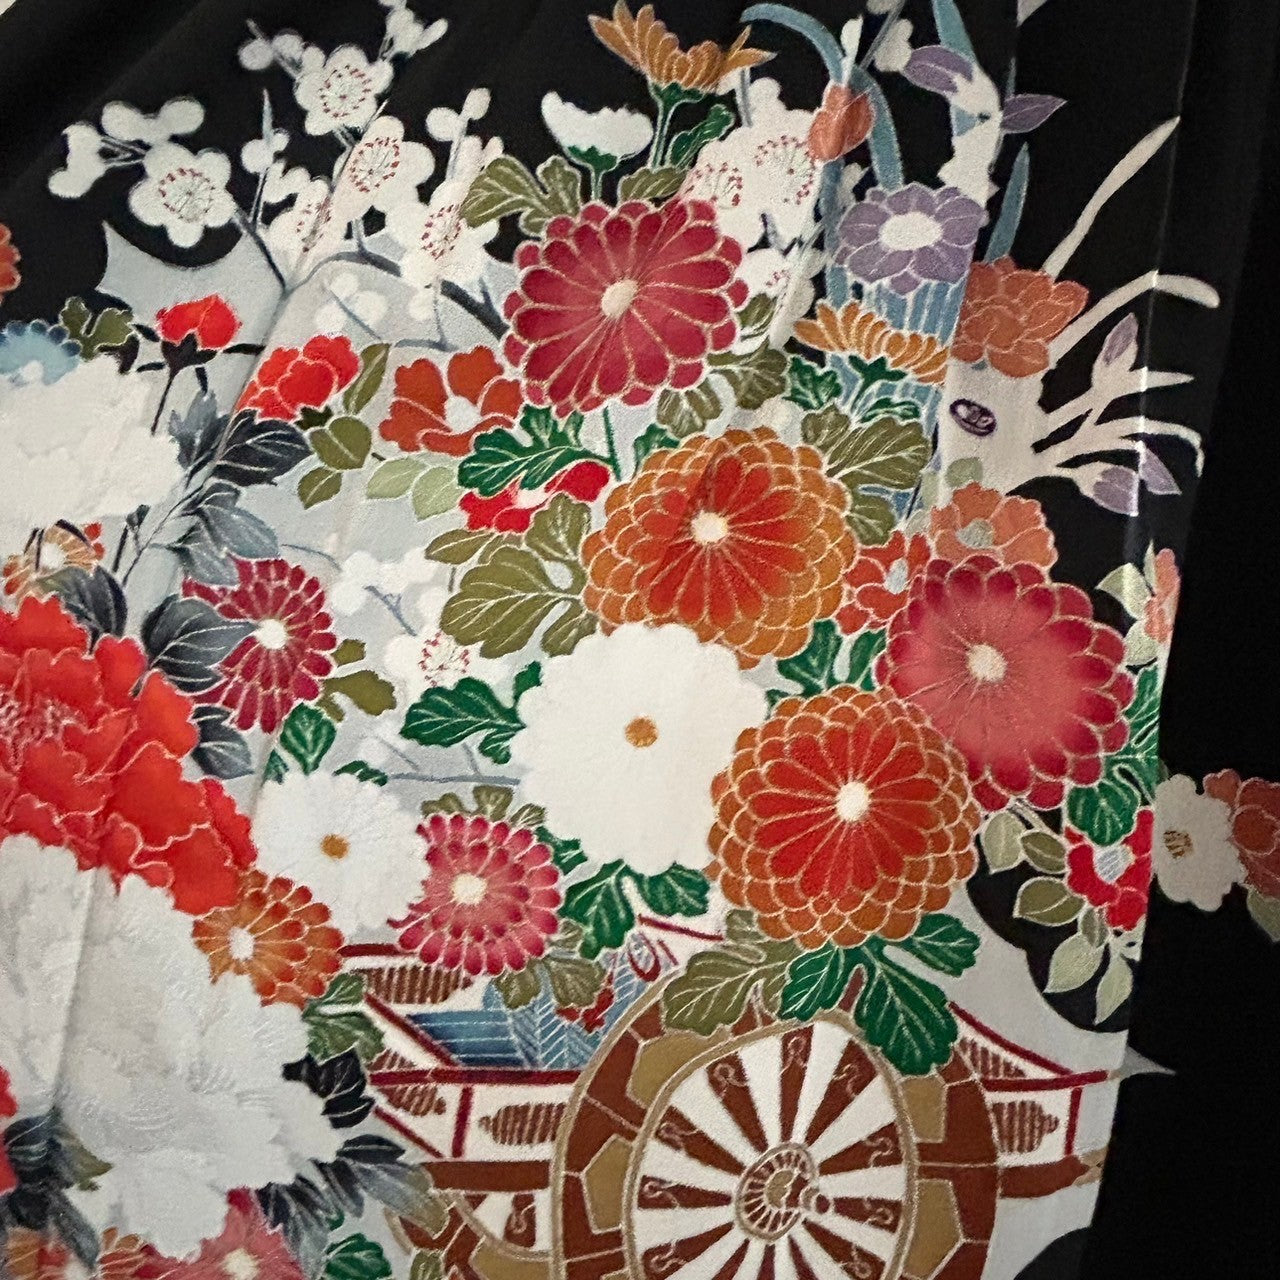 Silk Kimono dress, Tomesode 留袖, hand crafted, Upcycled, #pre6